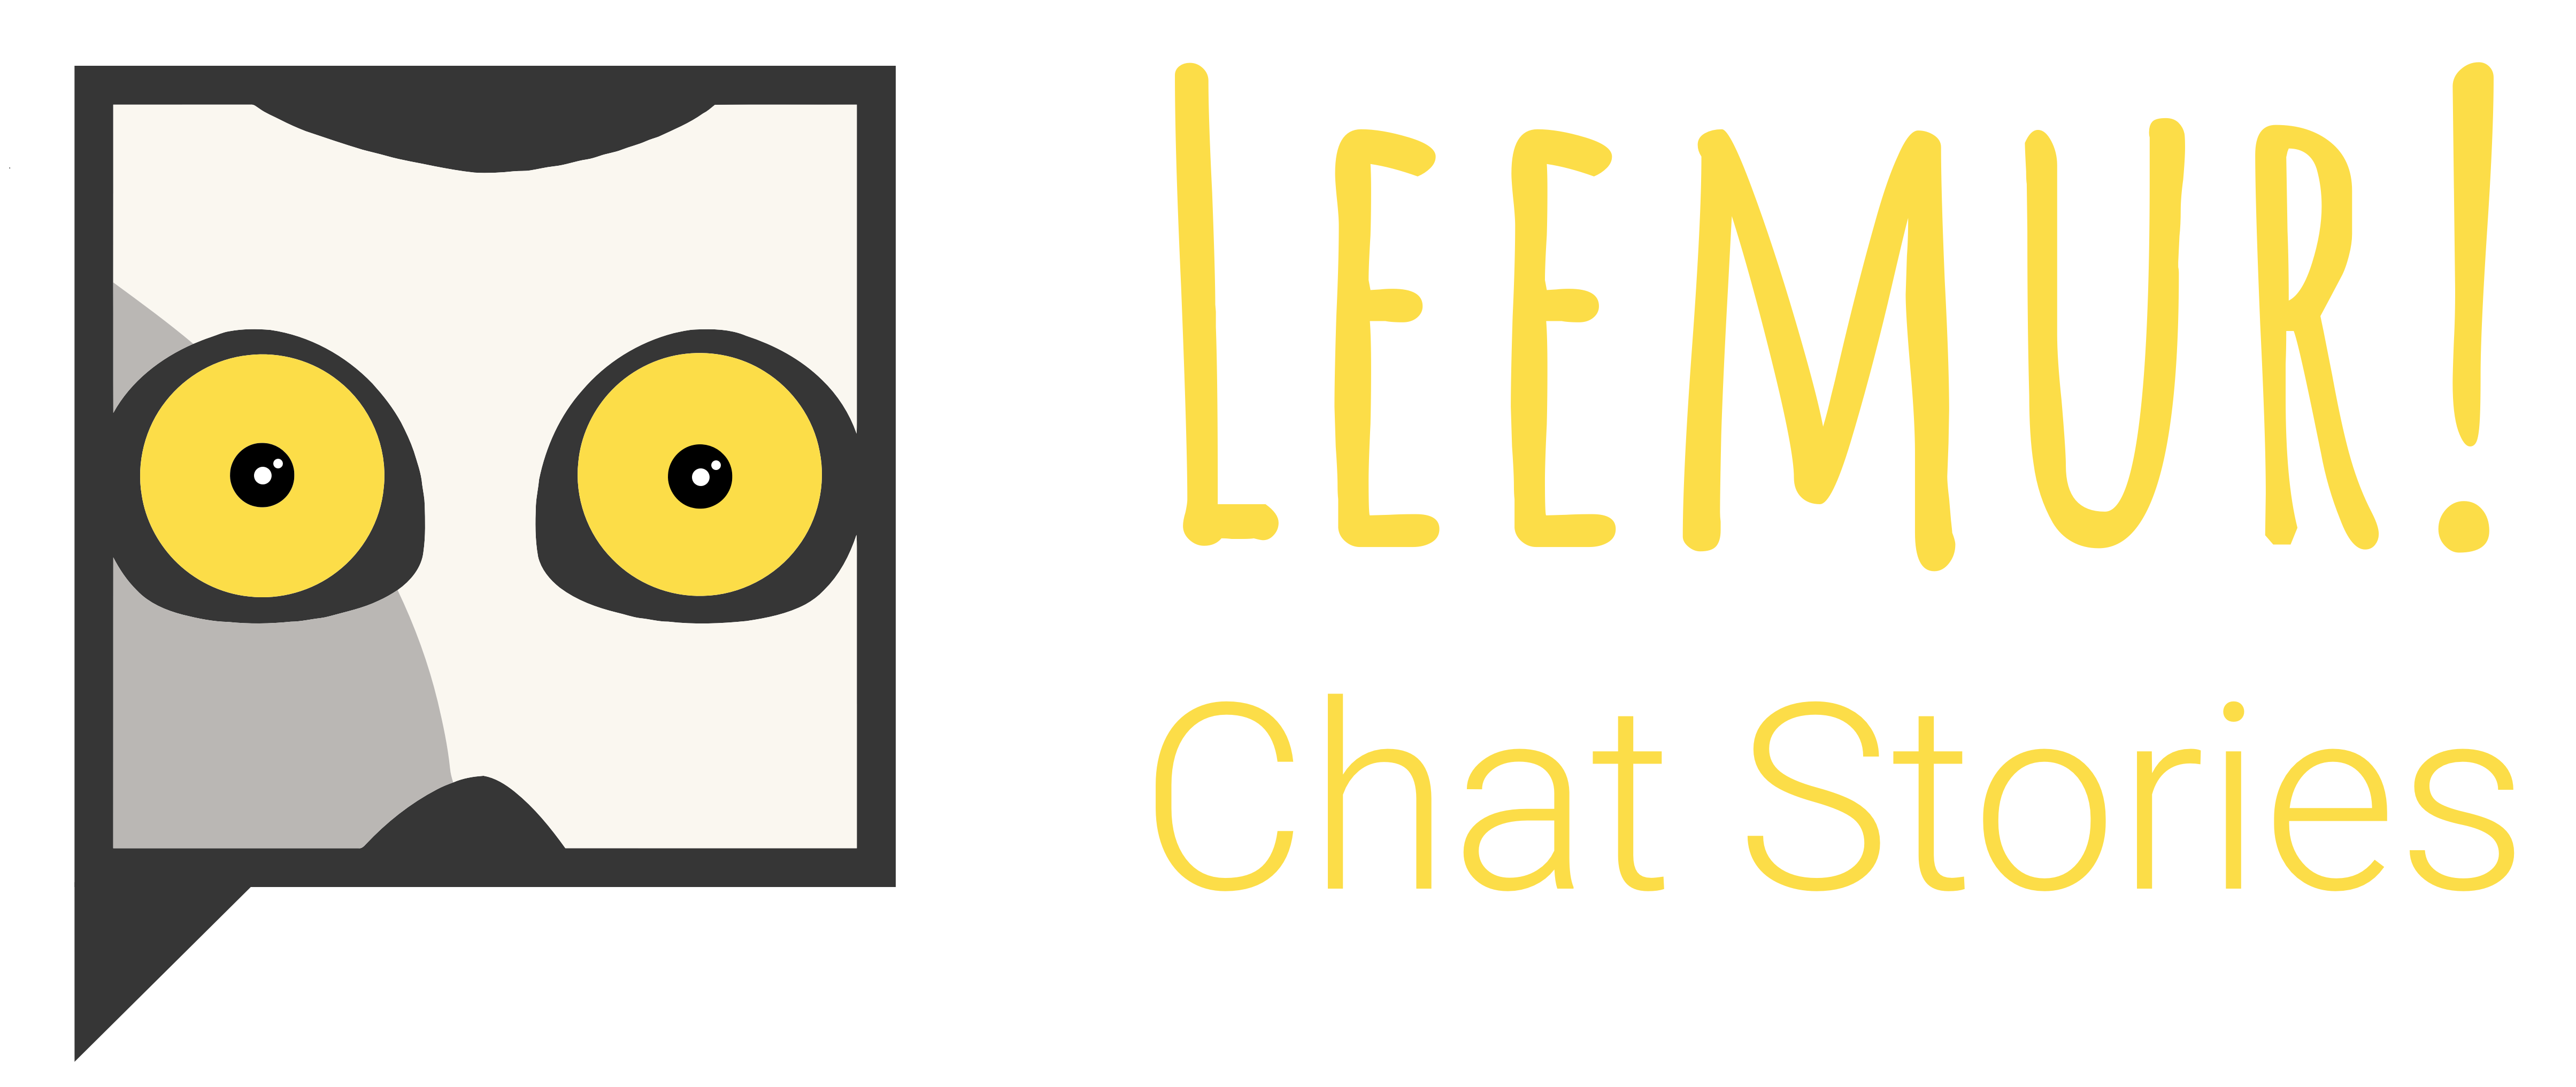 Chat Stories en Leemur - Lorenzo Silva